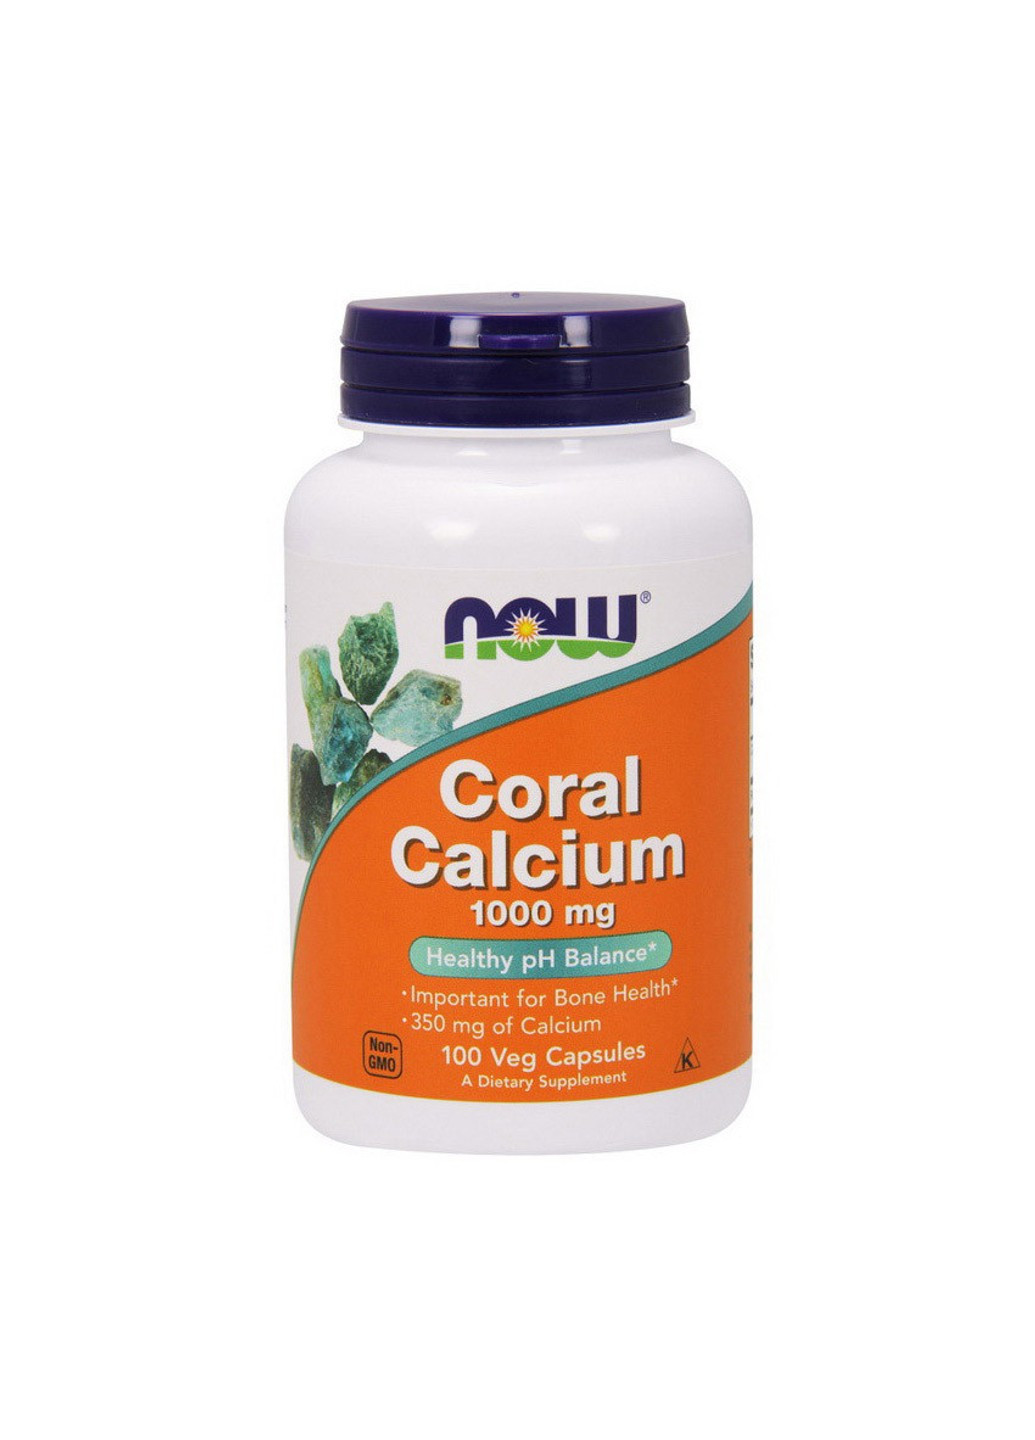 Коралловый кальций Coral Calcium 1000 mg (100 капс) нау фудс Now Foods (255408398)